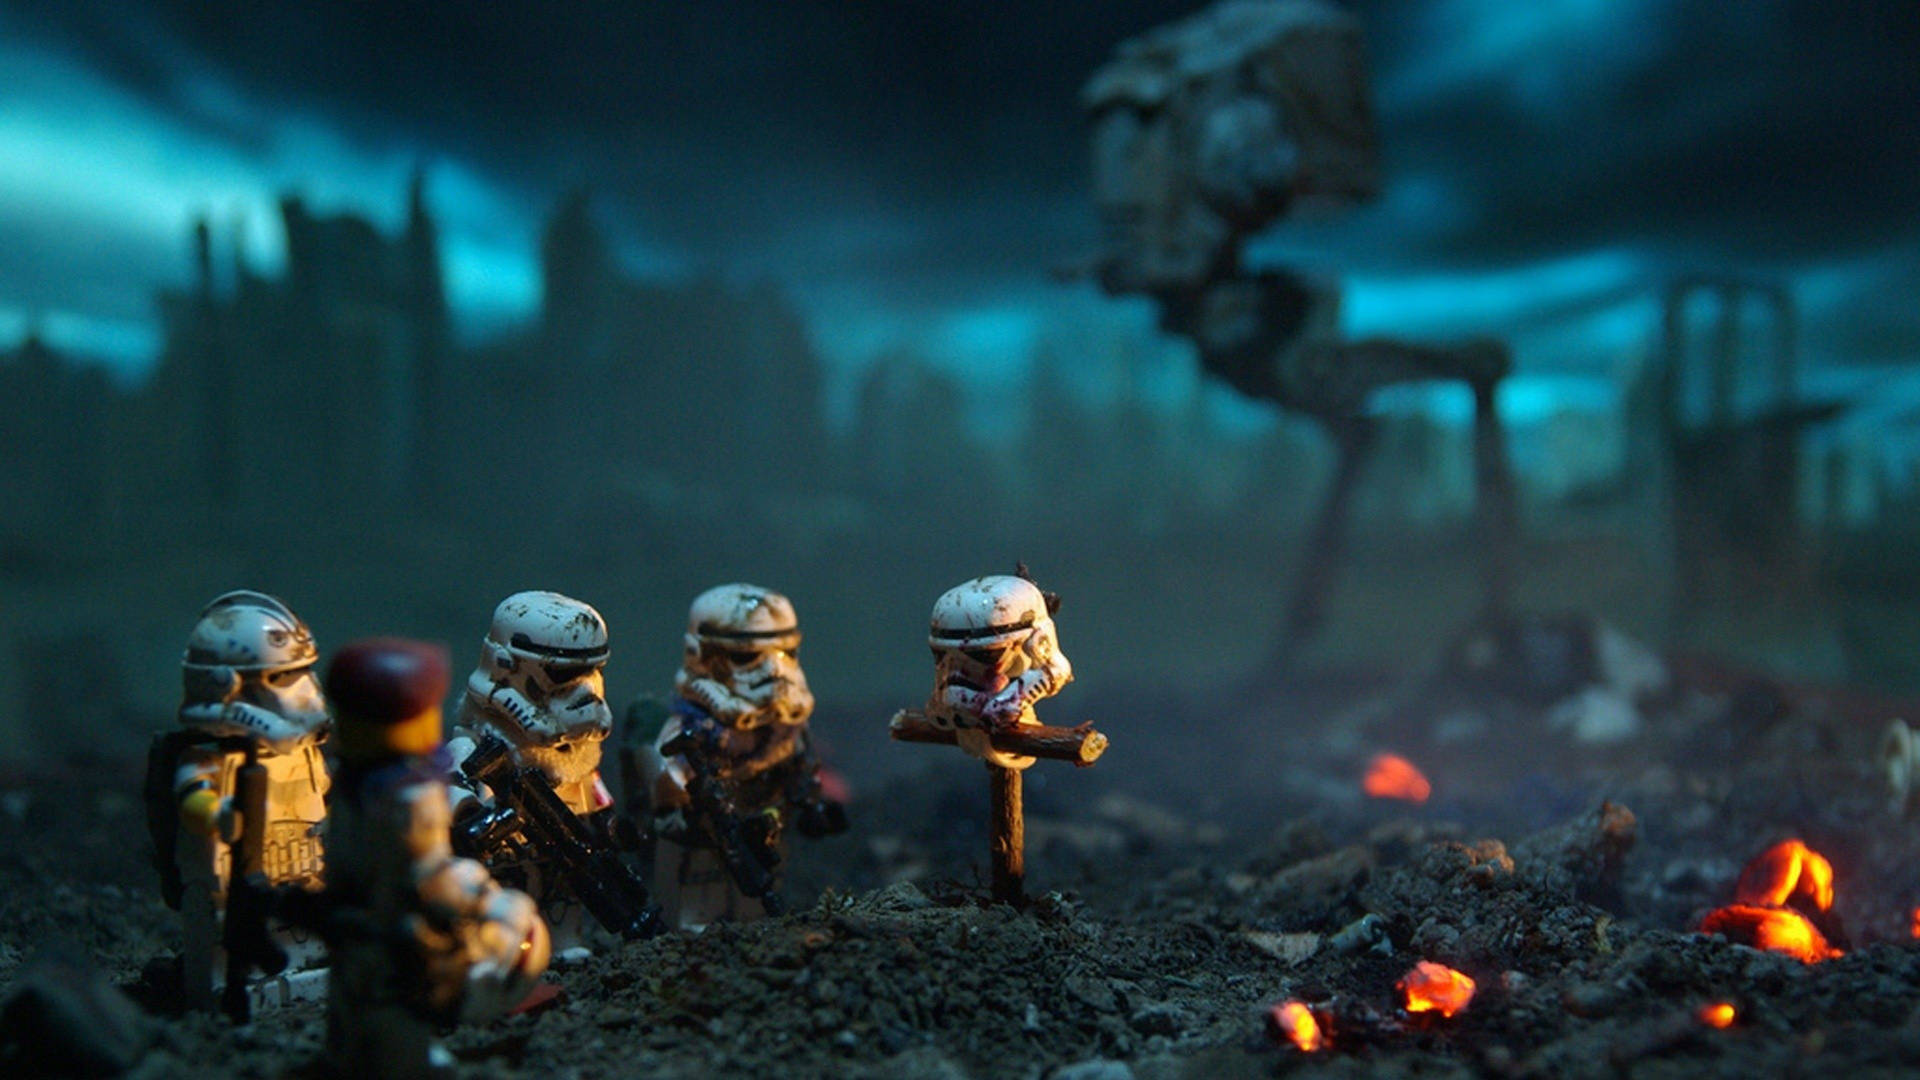 4k Lego Wars Background